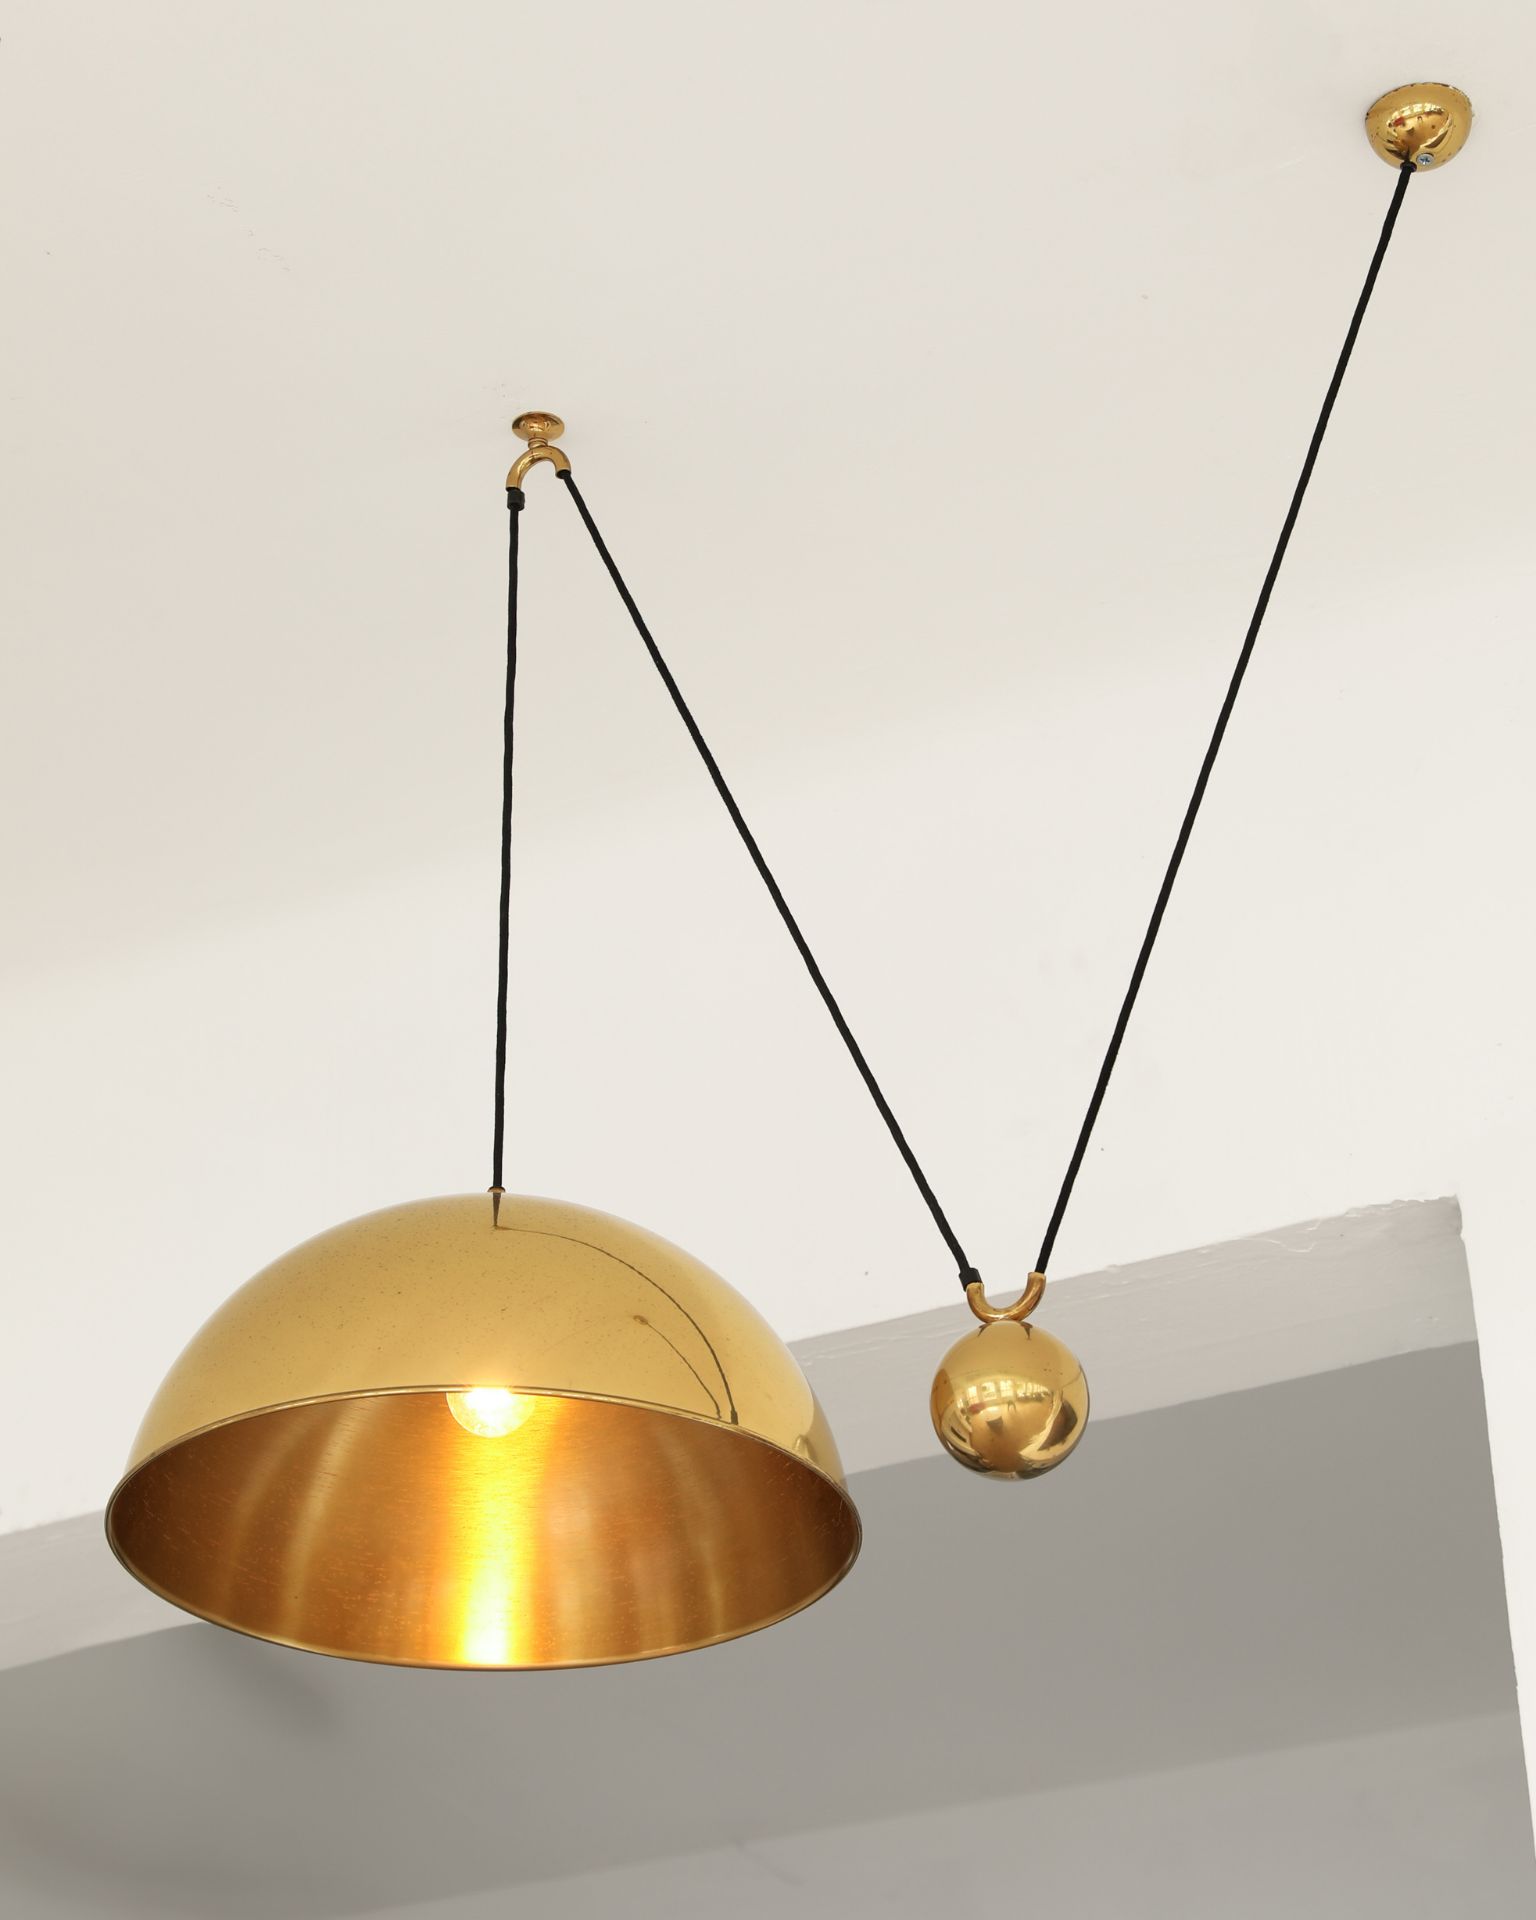 Florian Schulz, Adjustable Pendant Lamp with counterweight, model Posa D. 49 cm